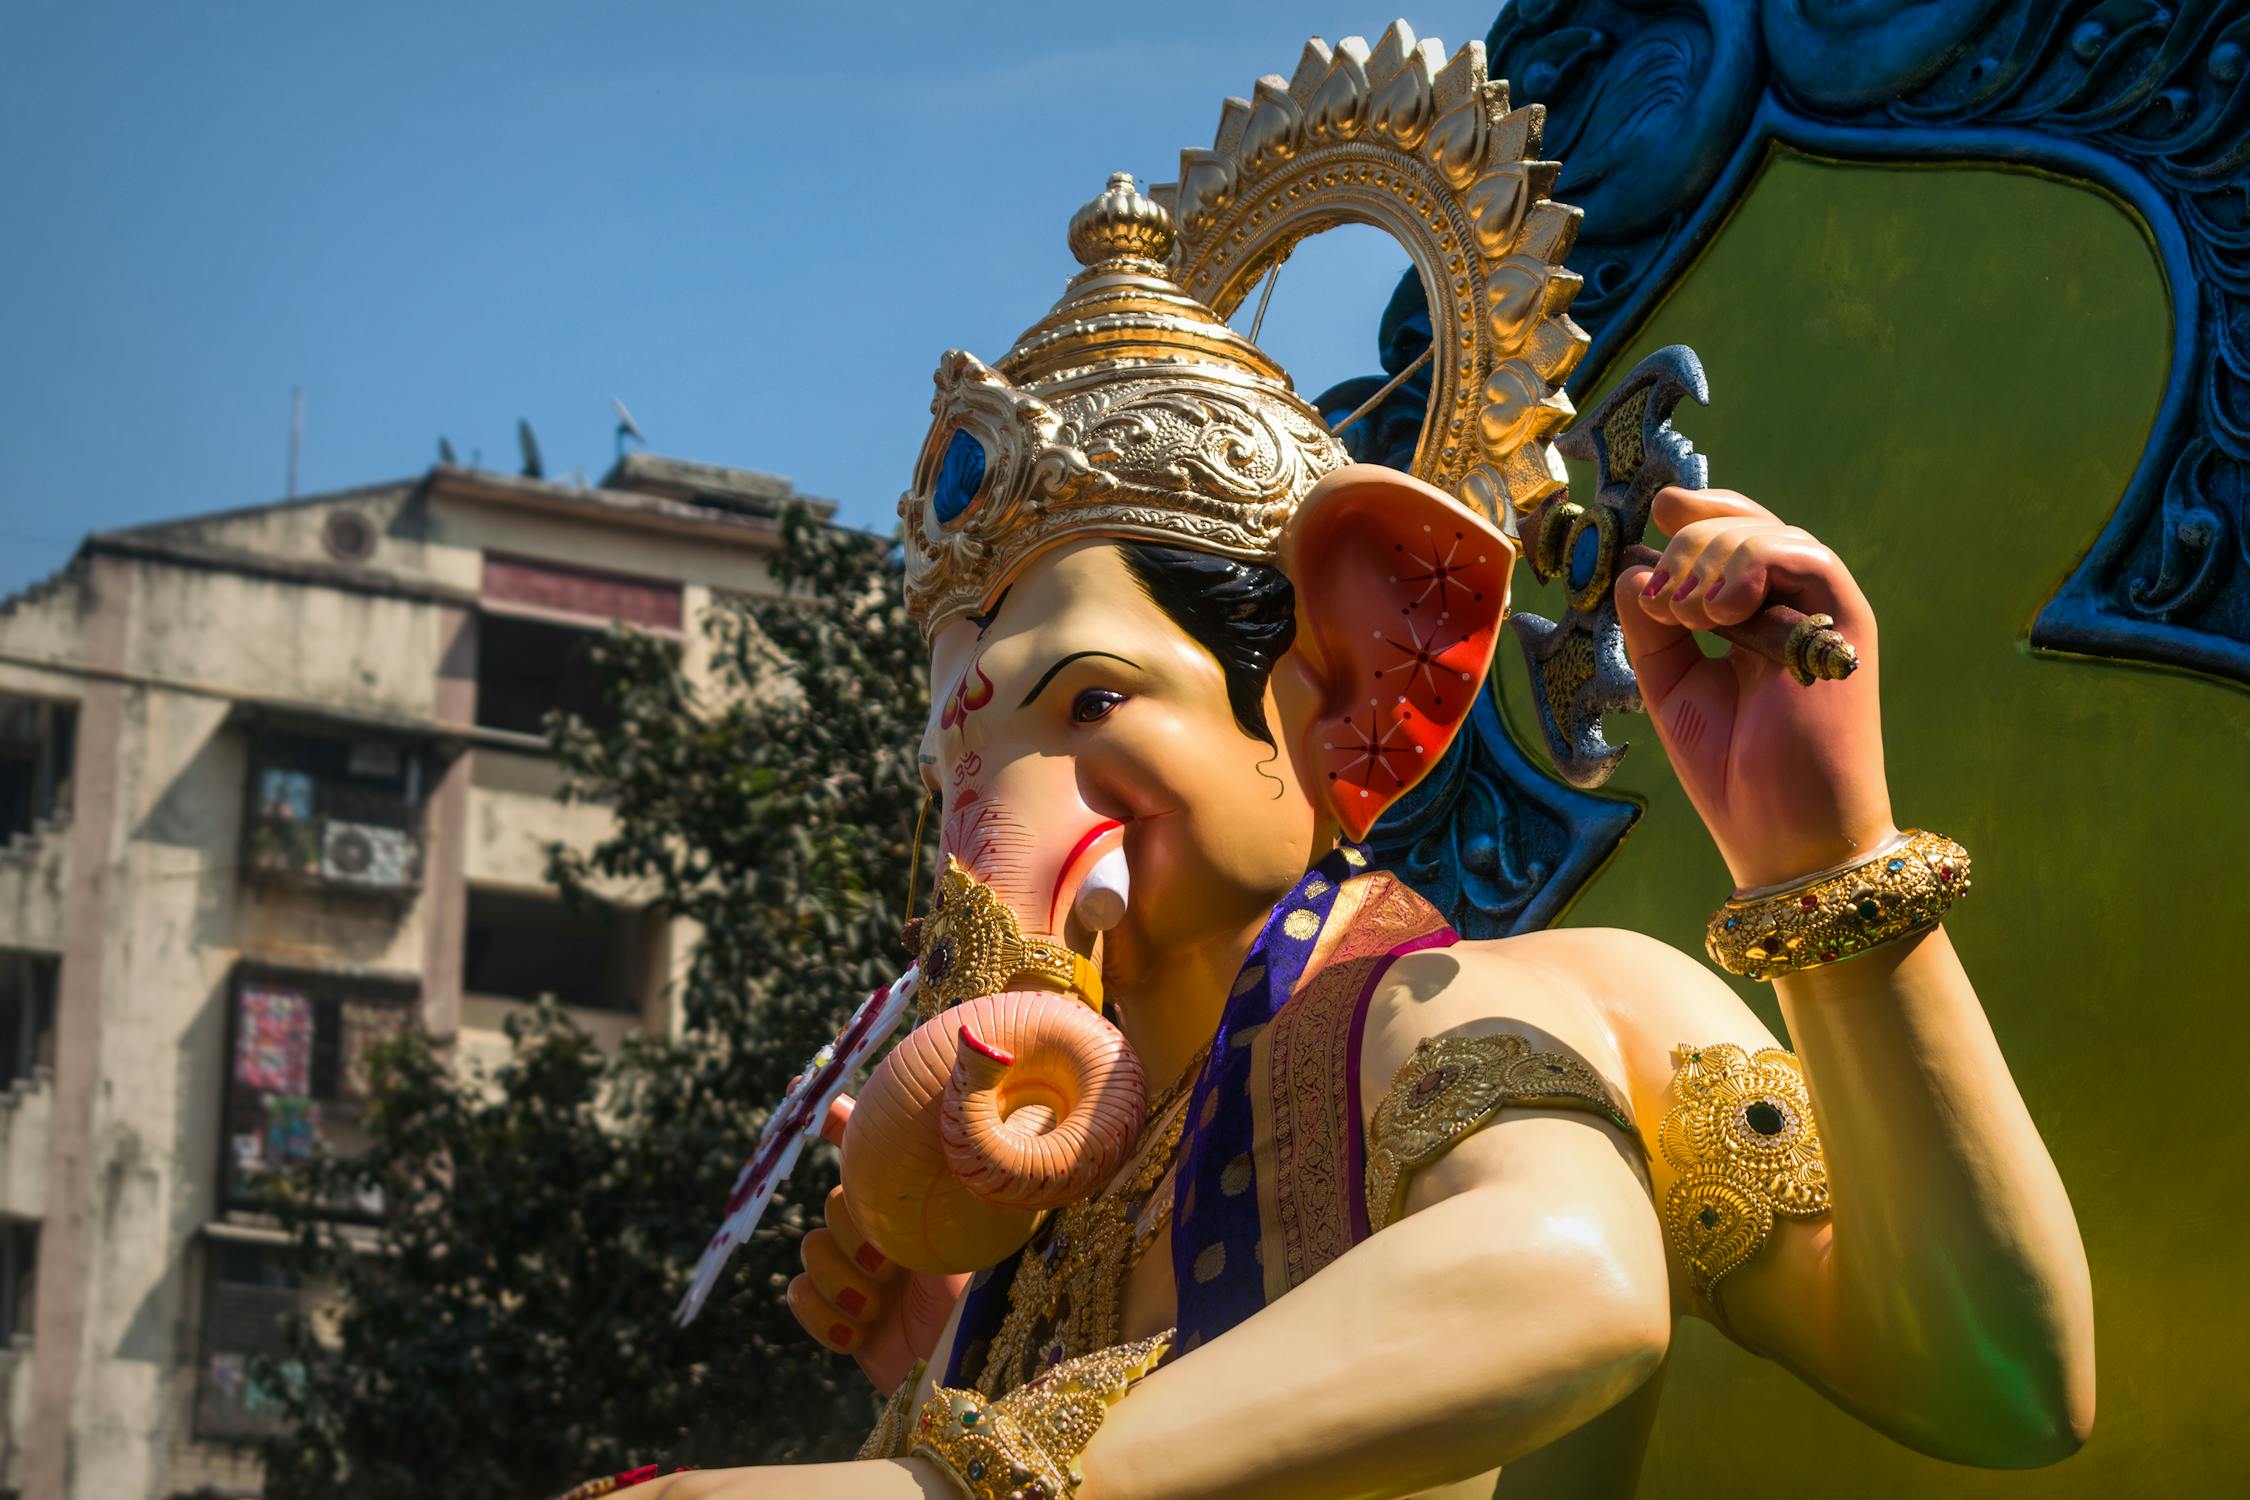 Lord Ganesha Photo by Sonika Agarwal from Pexels: https://www.pexels.com/photo/close-up-shot-of-a-hindu-deity-statue-8669378/